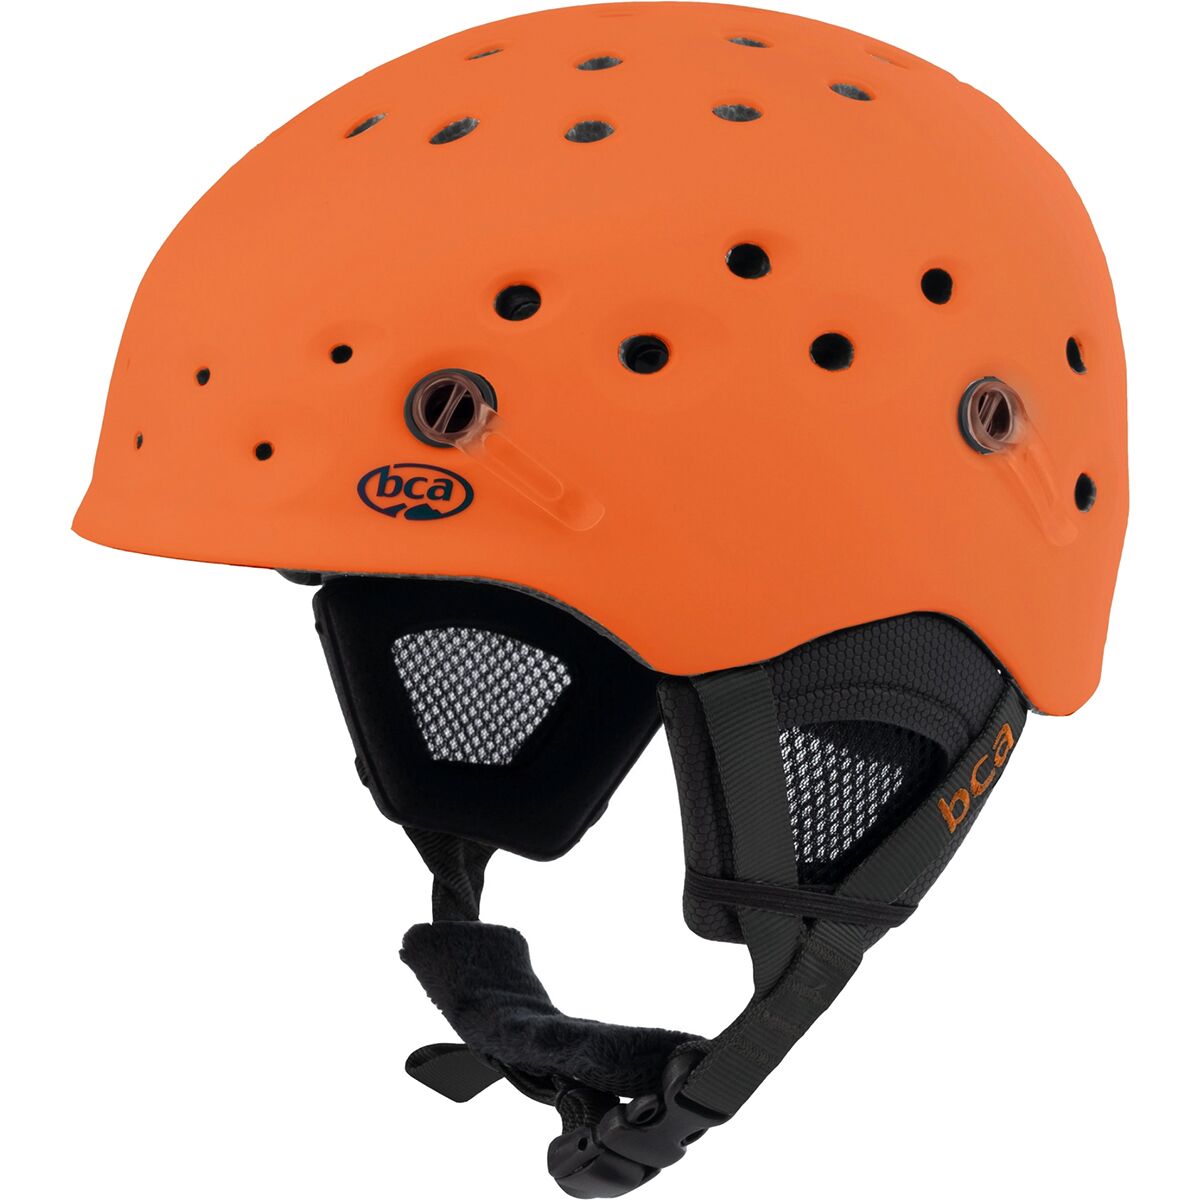 Photos - Protective Gear Set BCA BC Air Helmet 